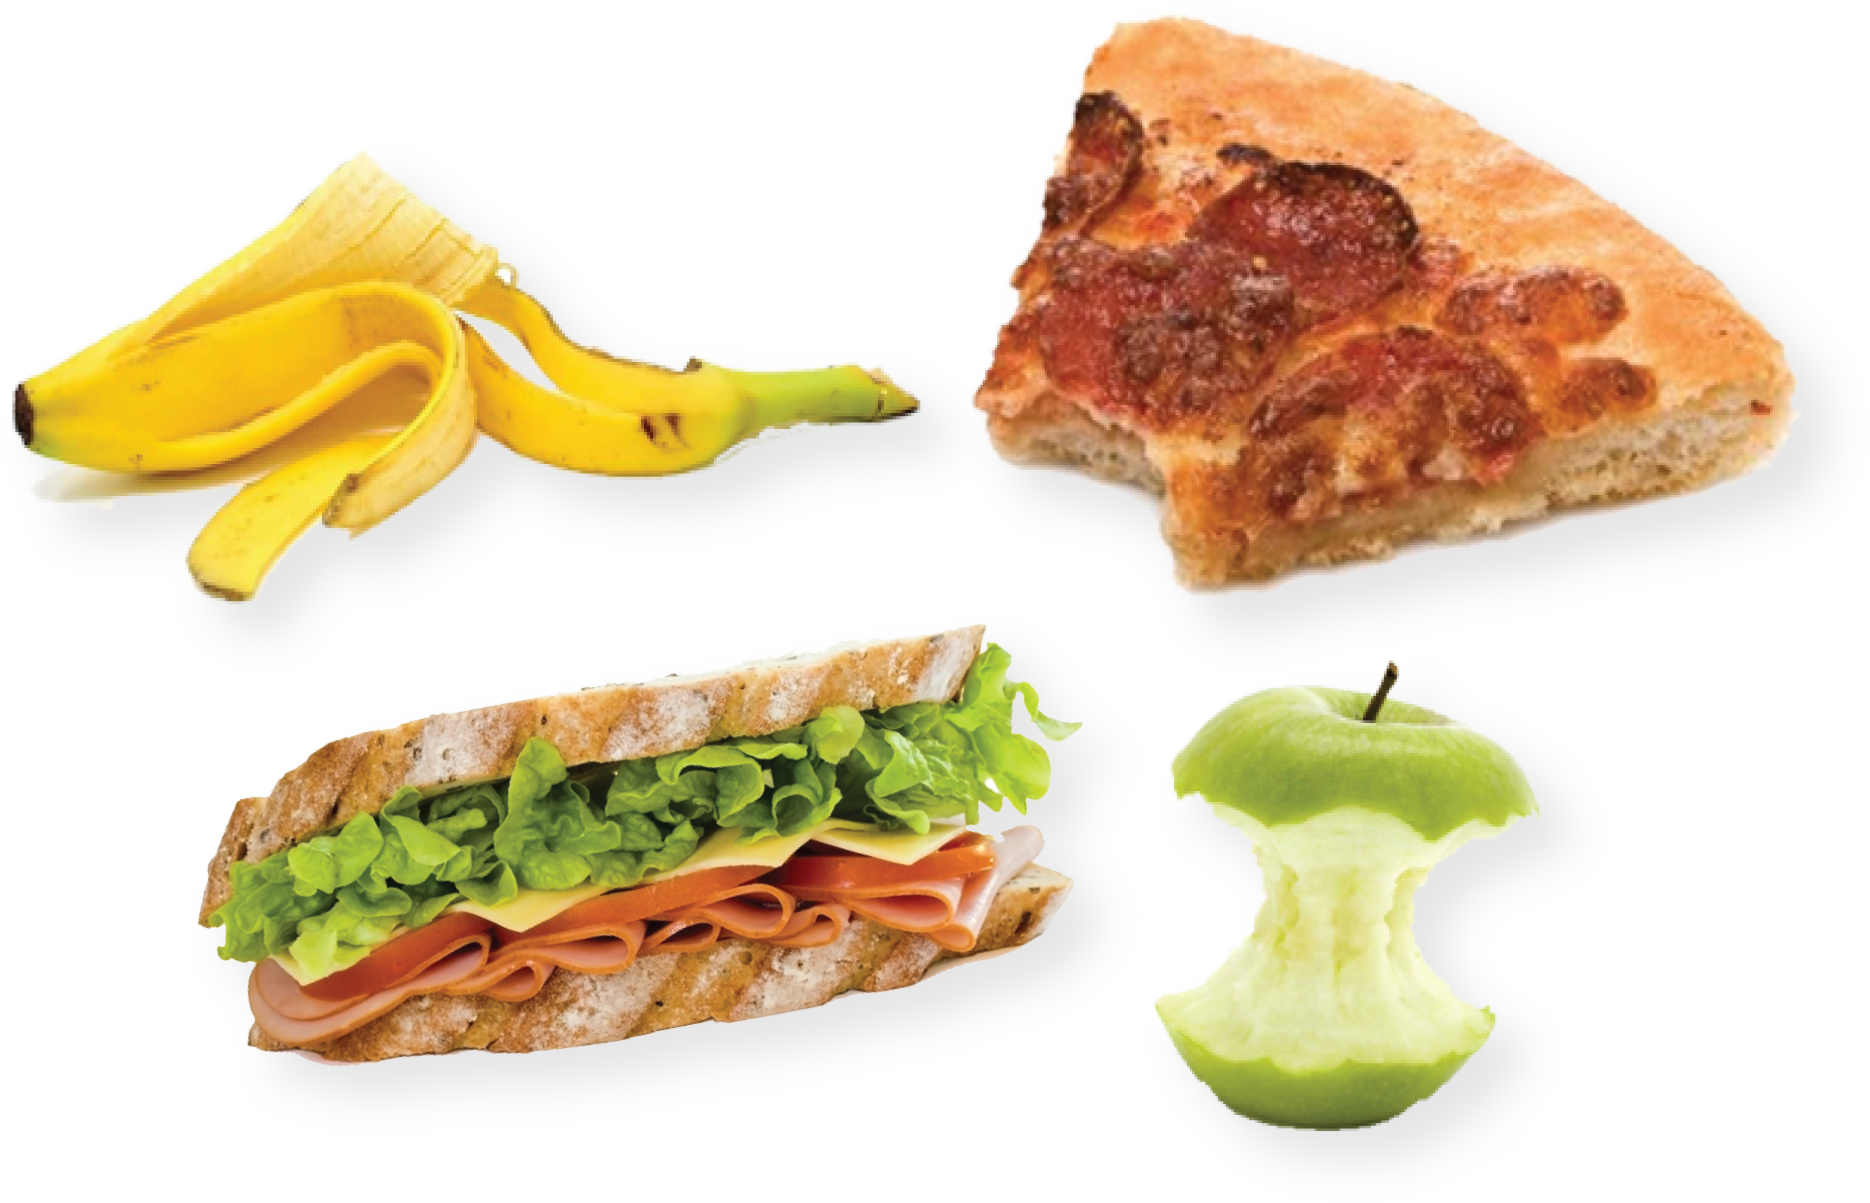 Banana peel, pizza slice, sub sandwich and an apple.